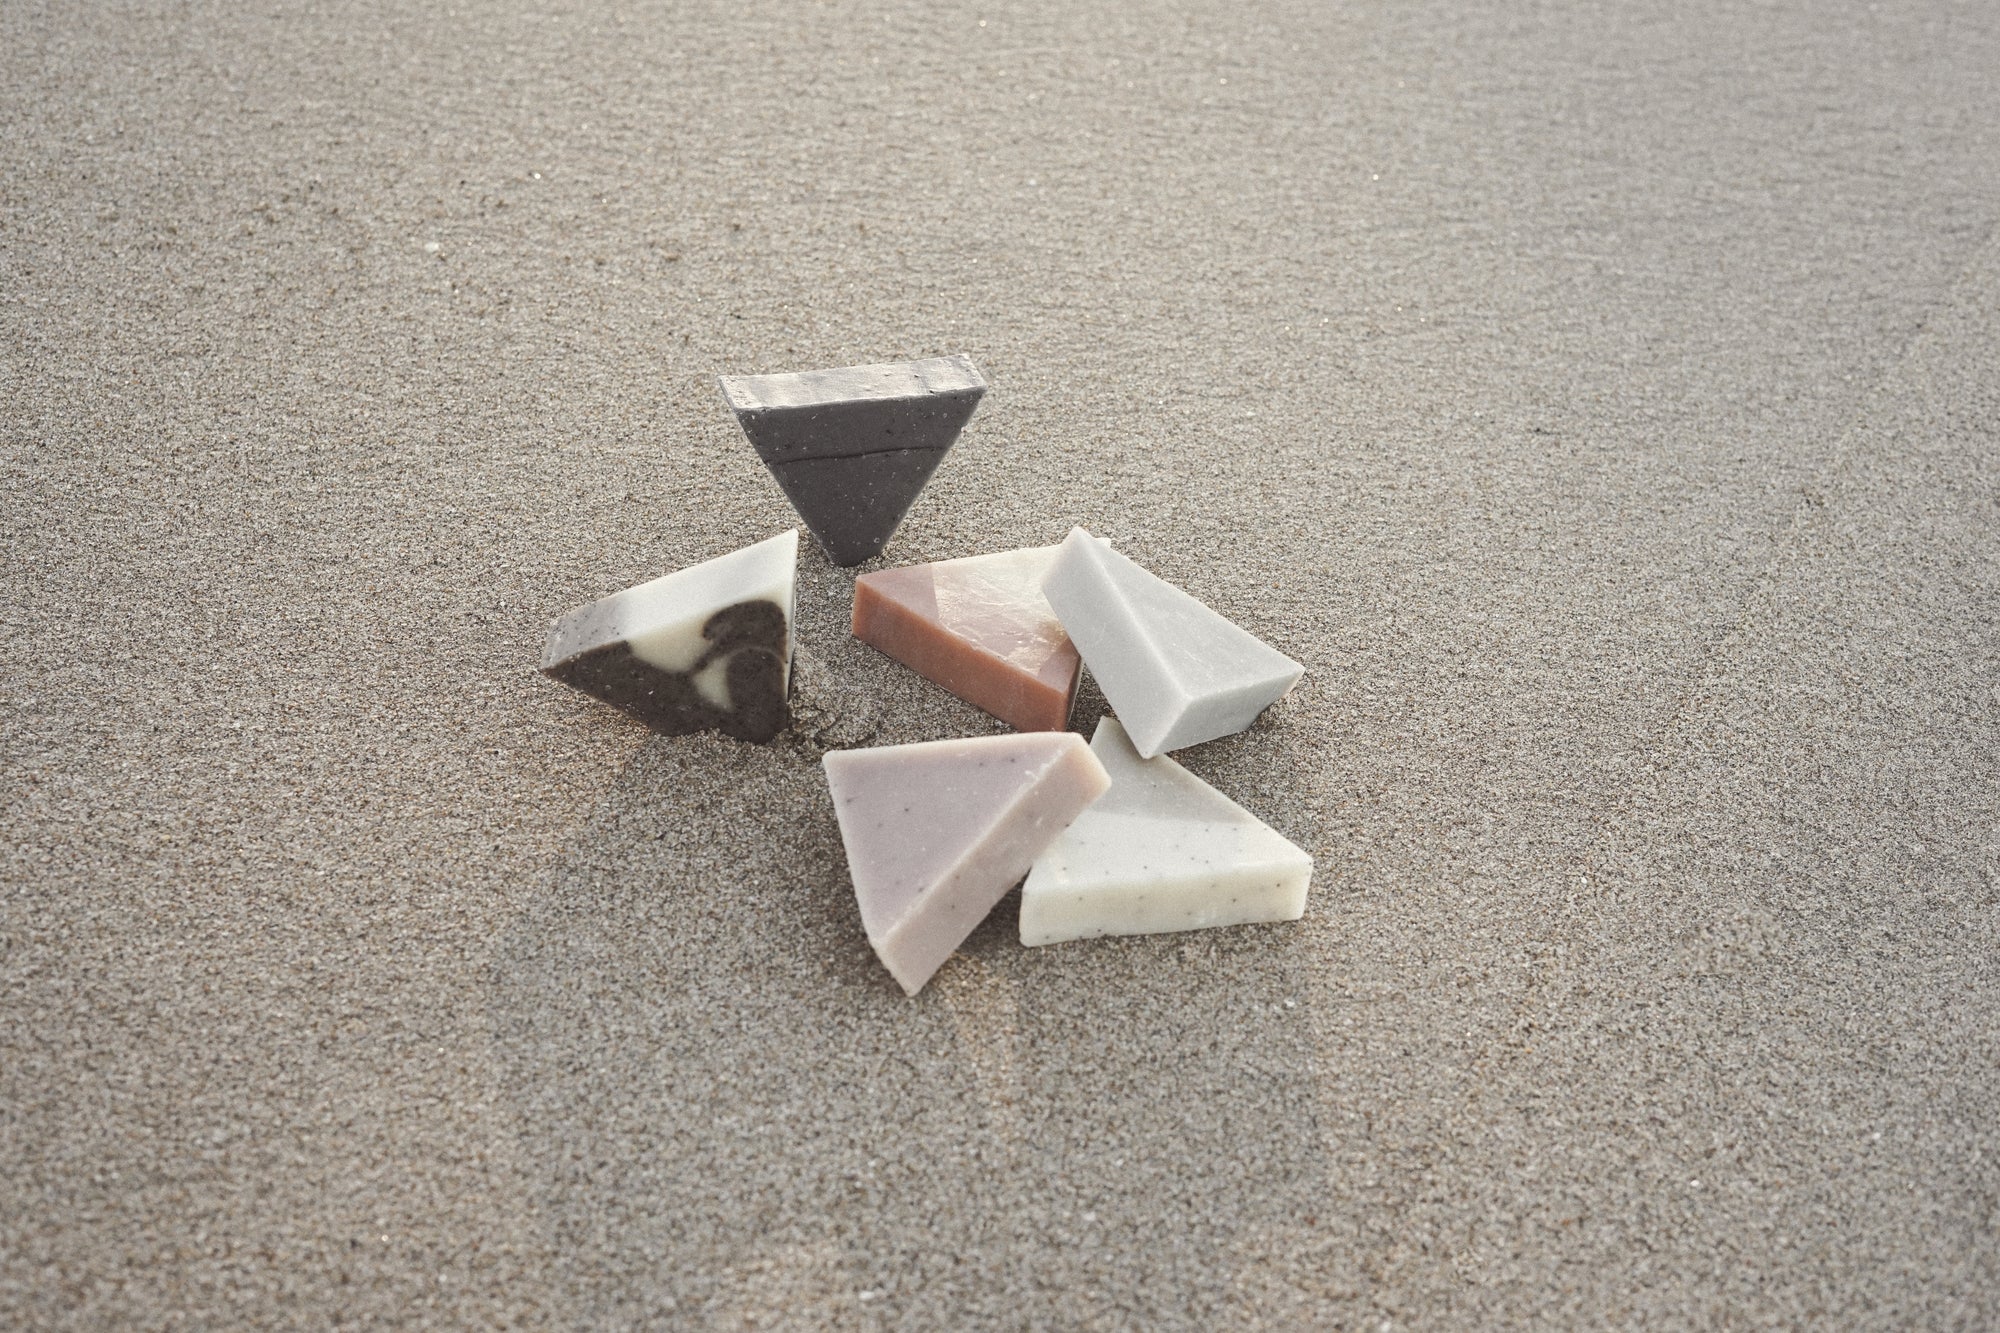 Six soap triangles on a sandy beach